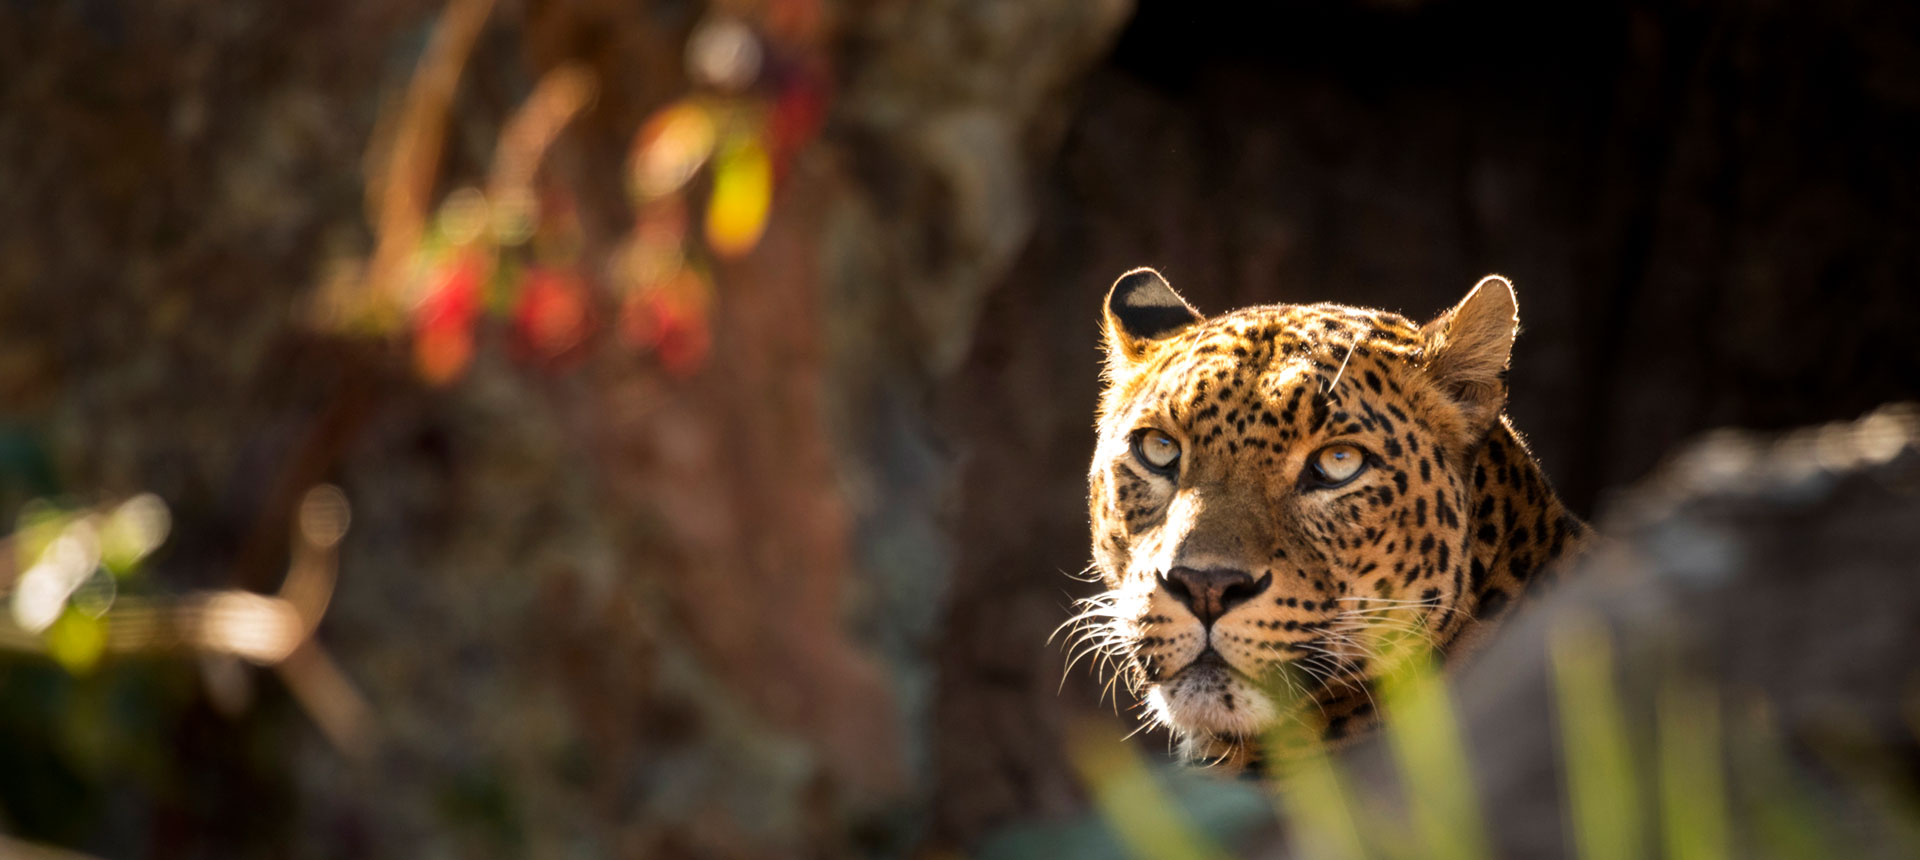 jawai leopard safari lodge photos